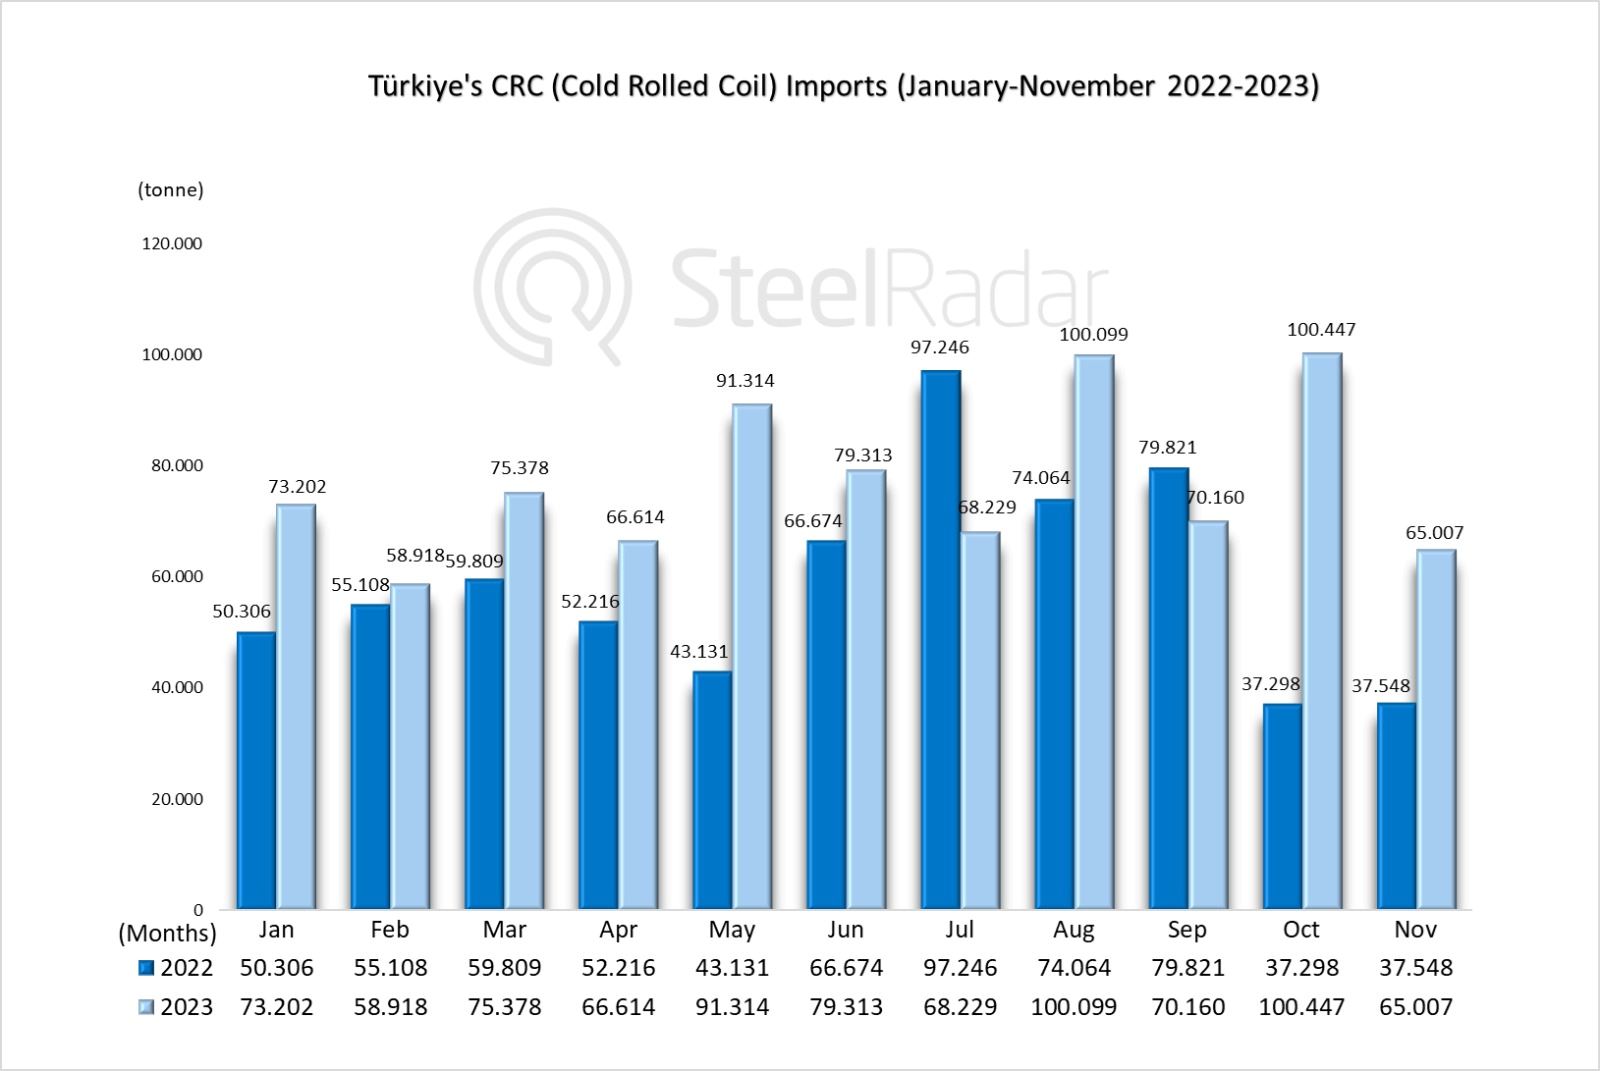 Türkiye's CRC imports increased by 29.92% in January-November period